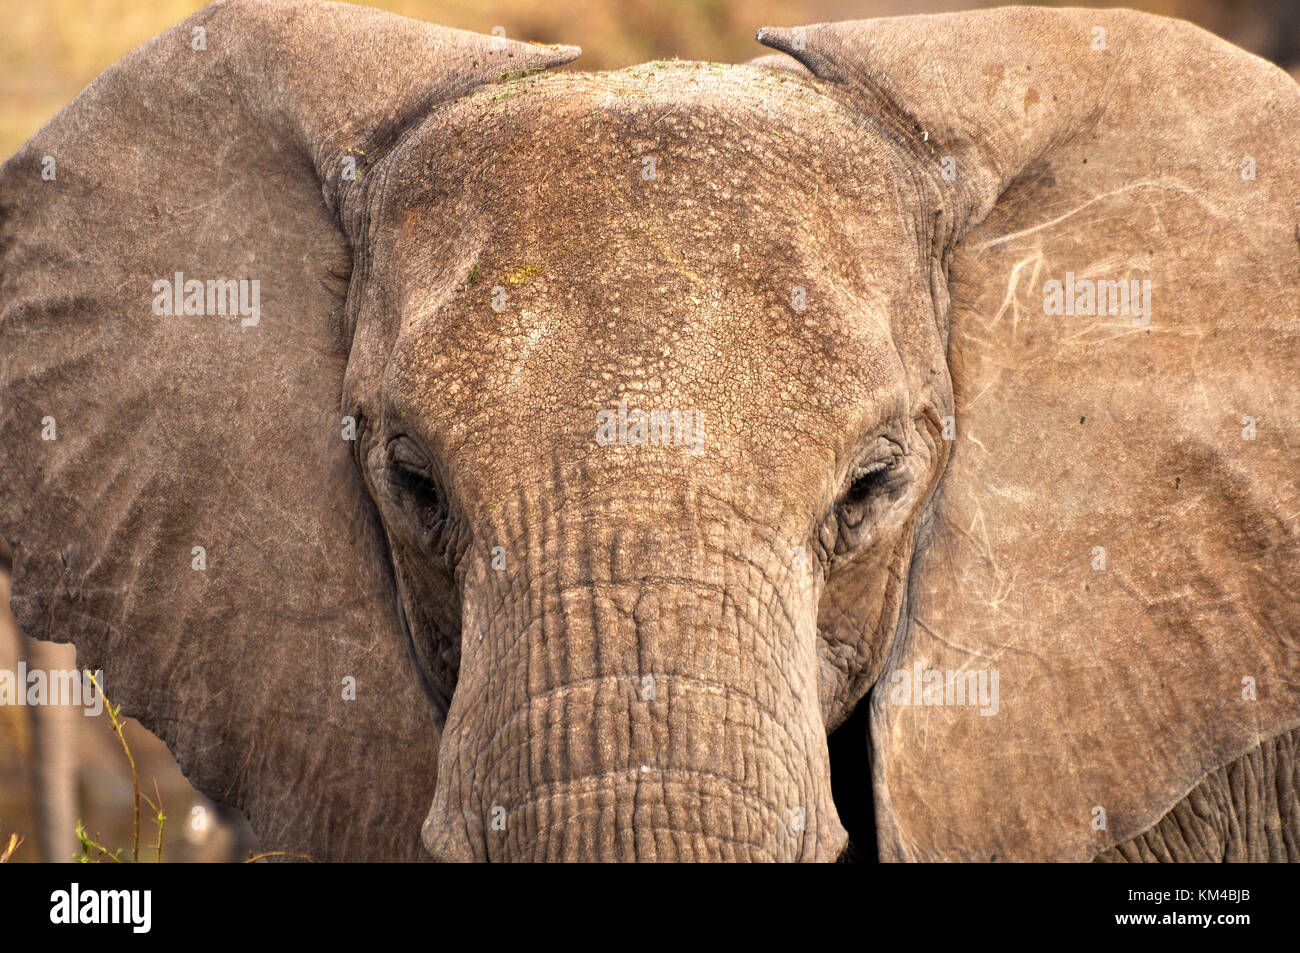 Bush Elephant (Loxodonta africana) close up detailed head shot. Taken in the Serengeti, Tanzania Stock Photo